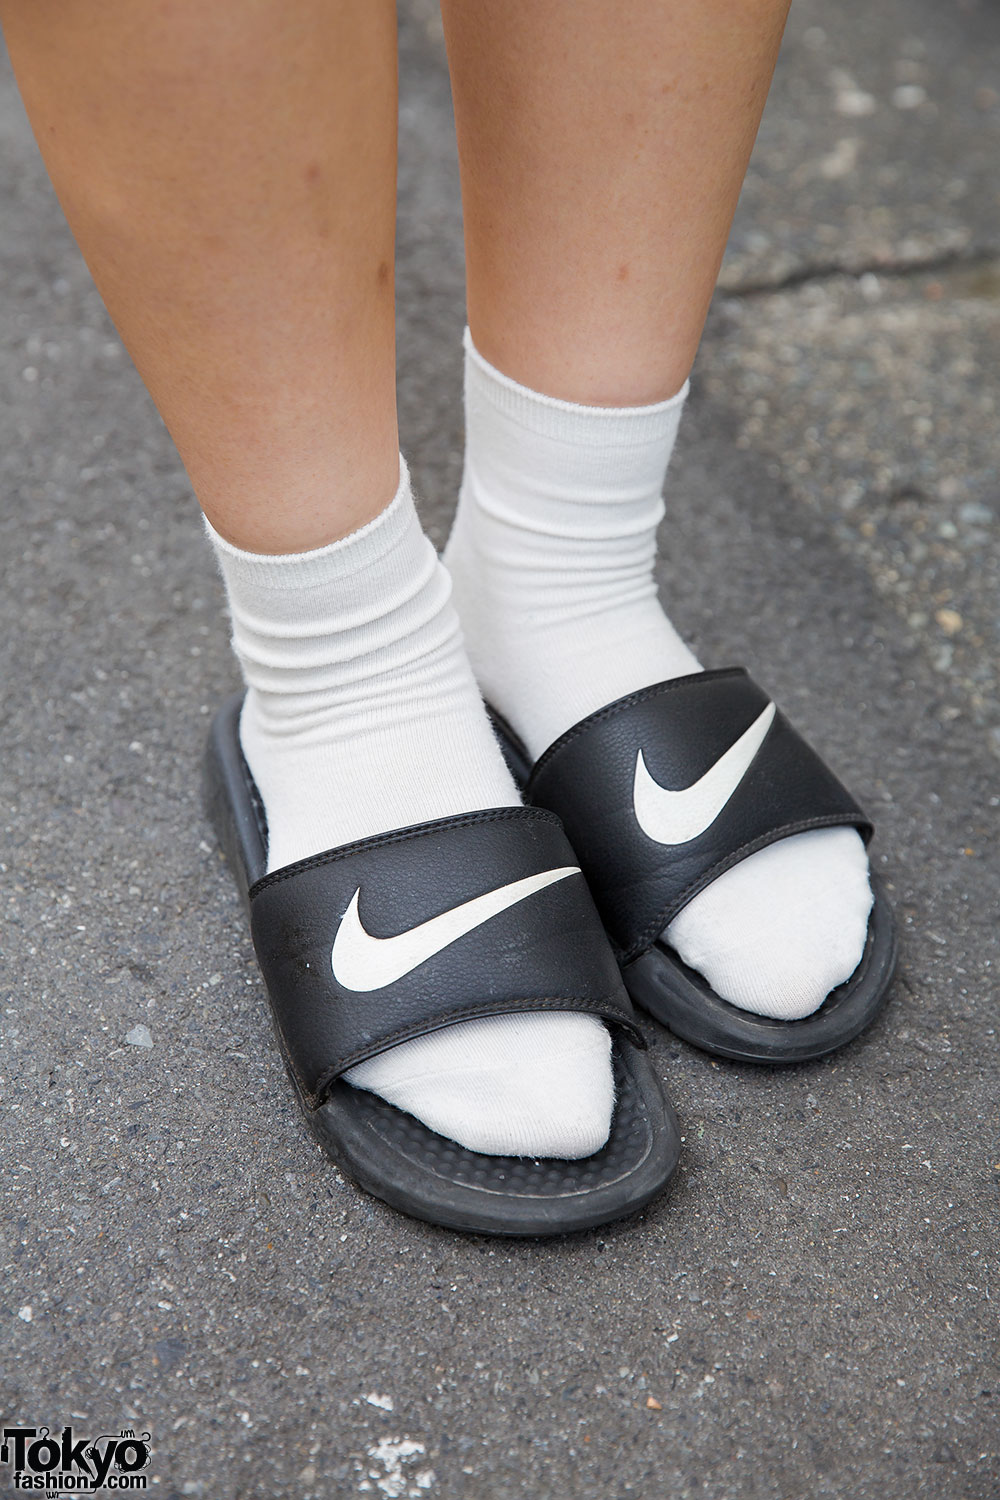 nike slippers with socks